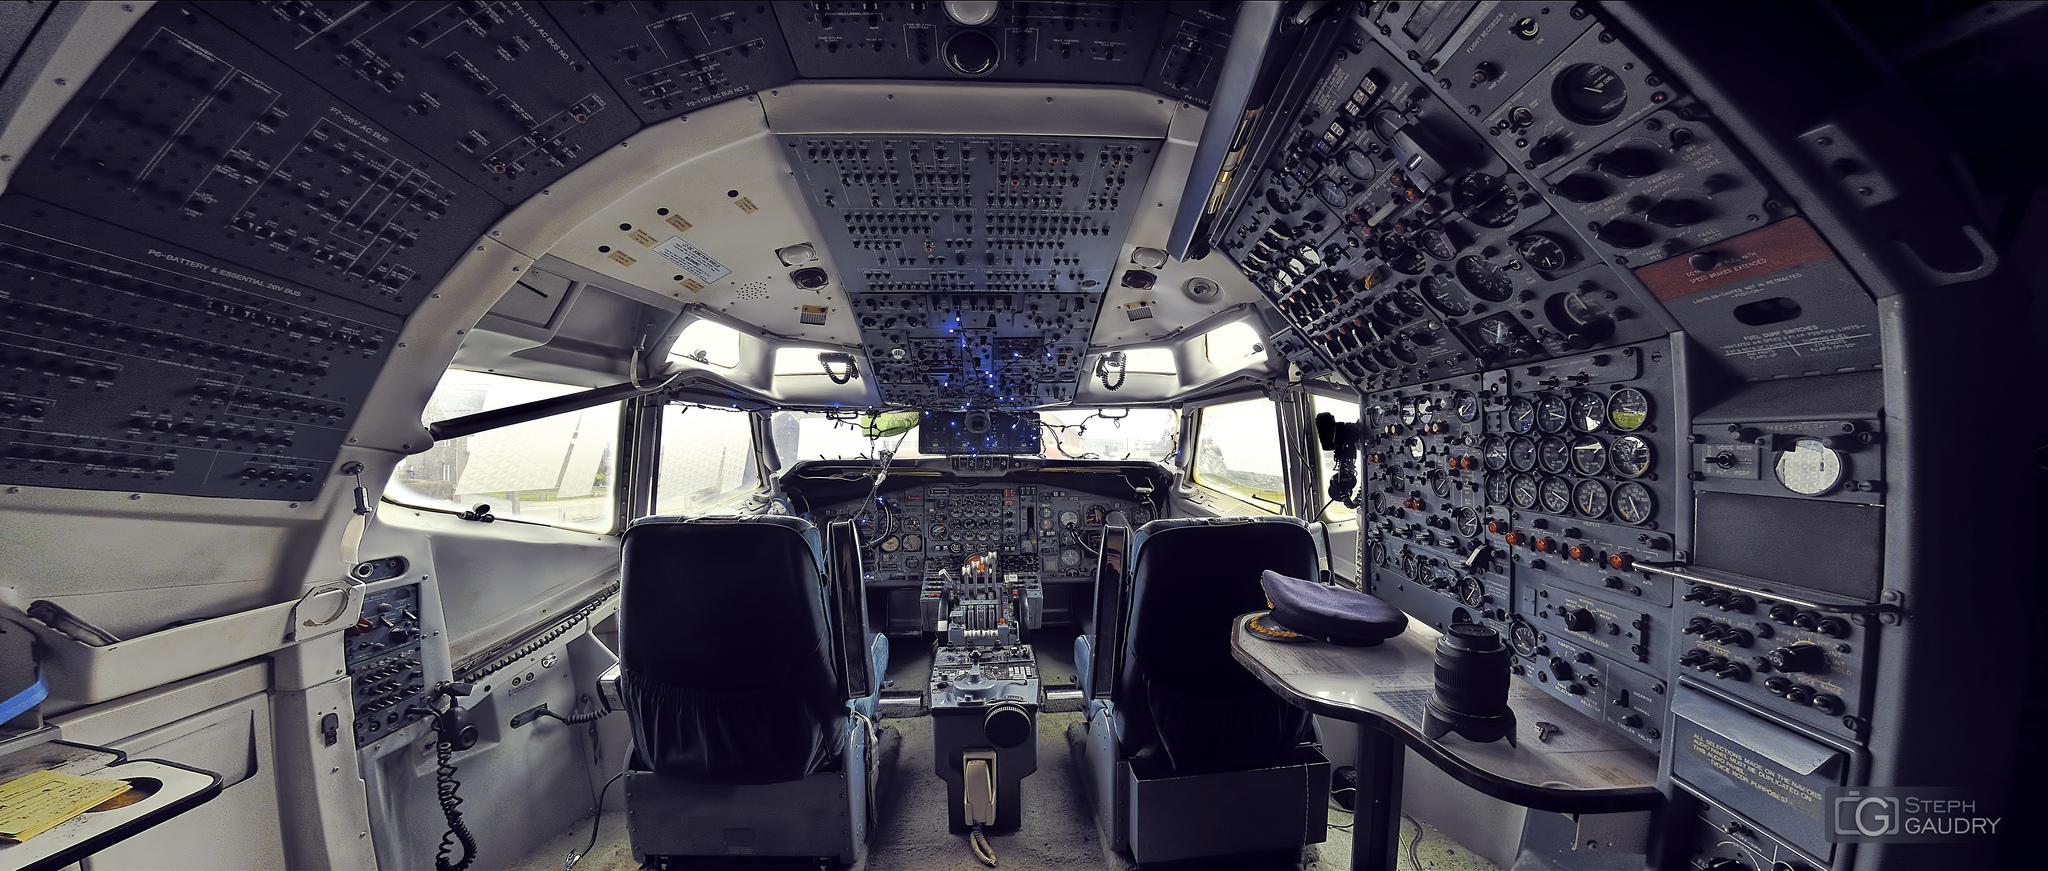 Cockpit Boeing 707 - full view [Click to start slideshow]